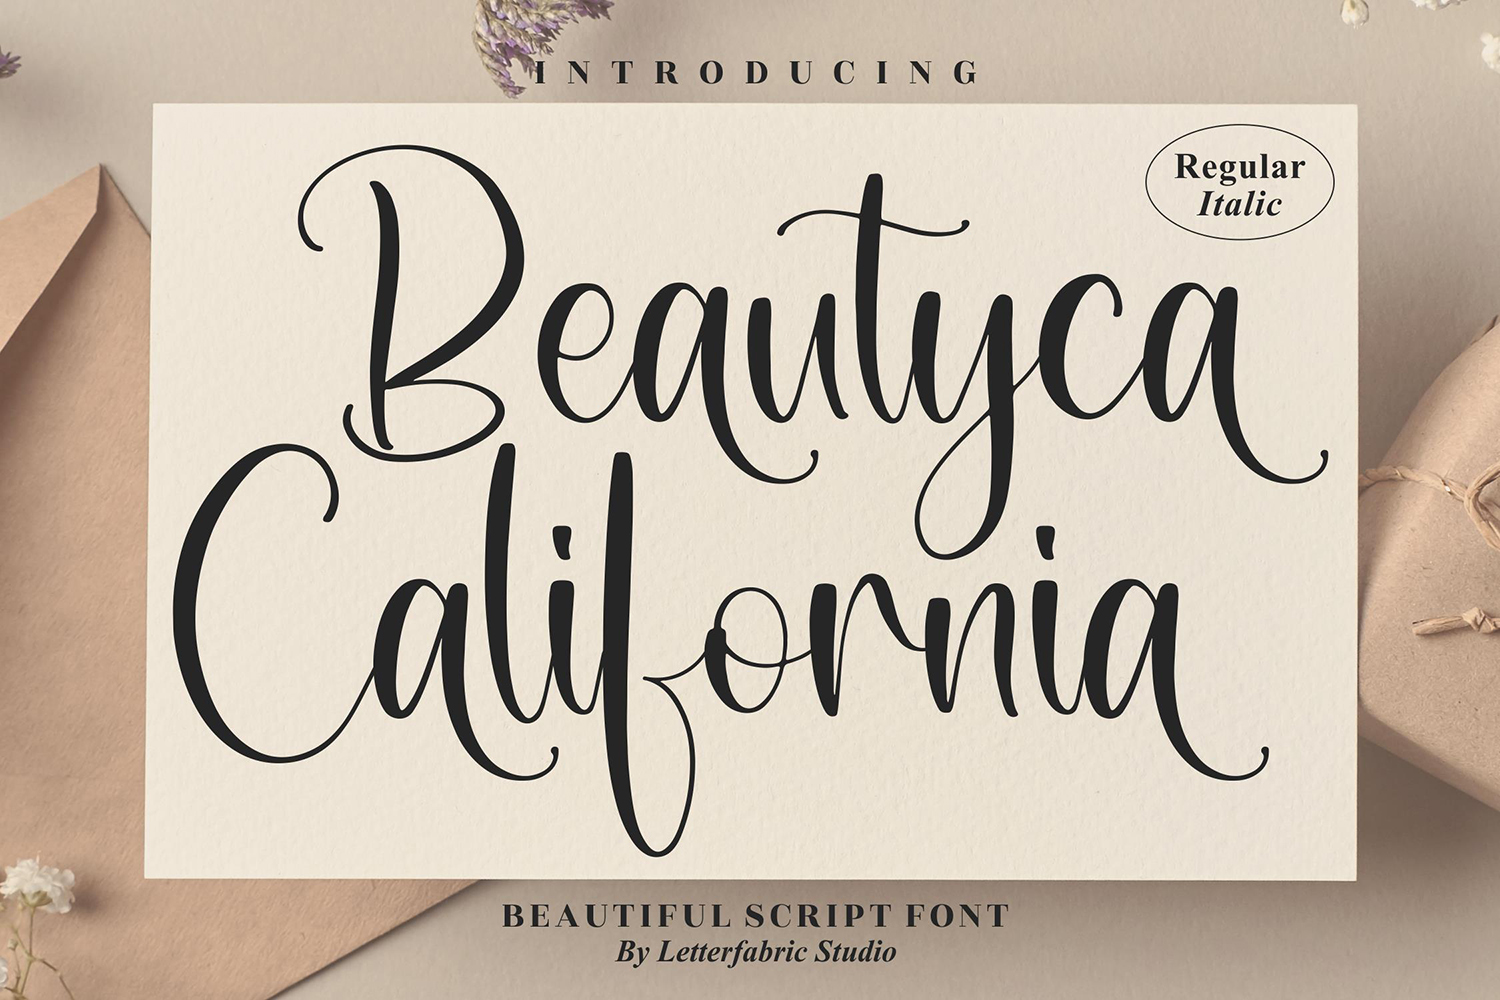 Beautyca California Free Font